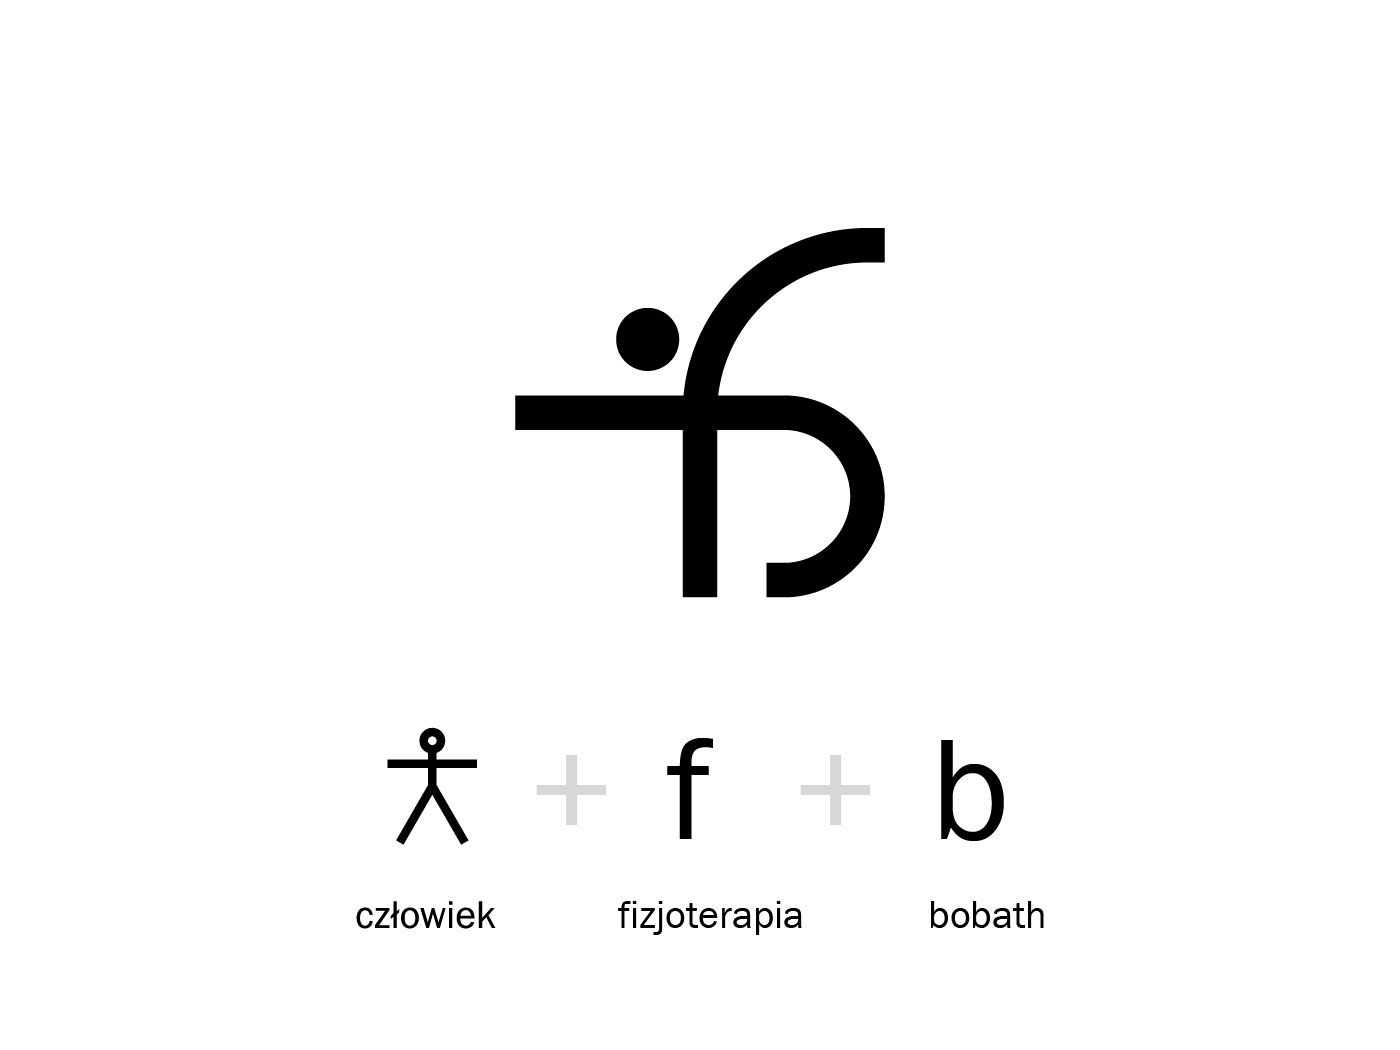 Bobath logo 20212